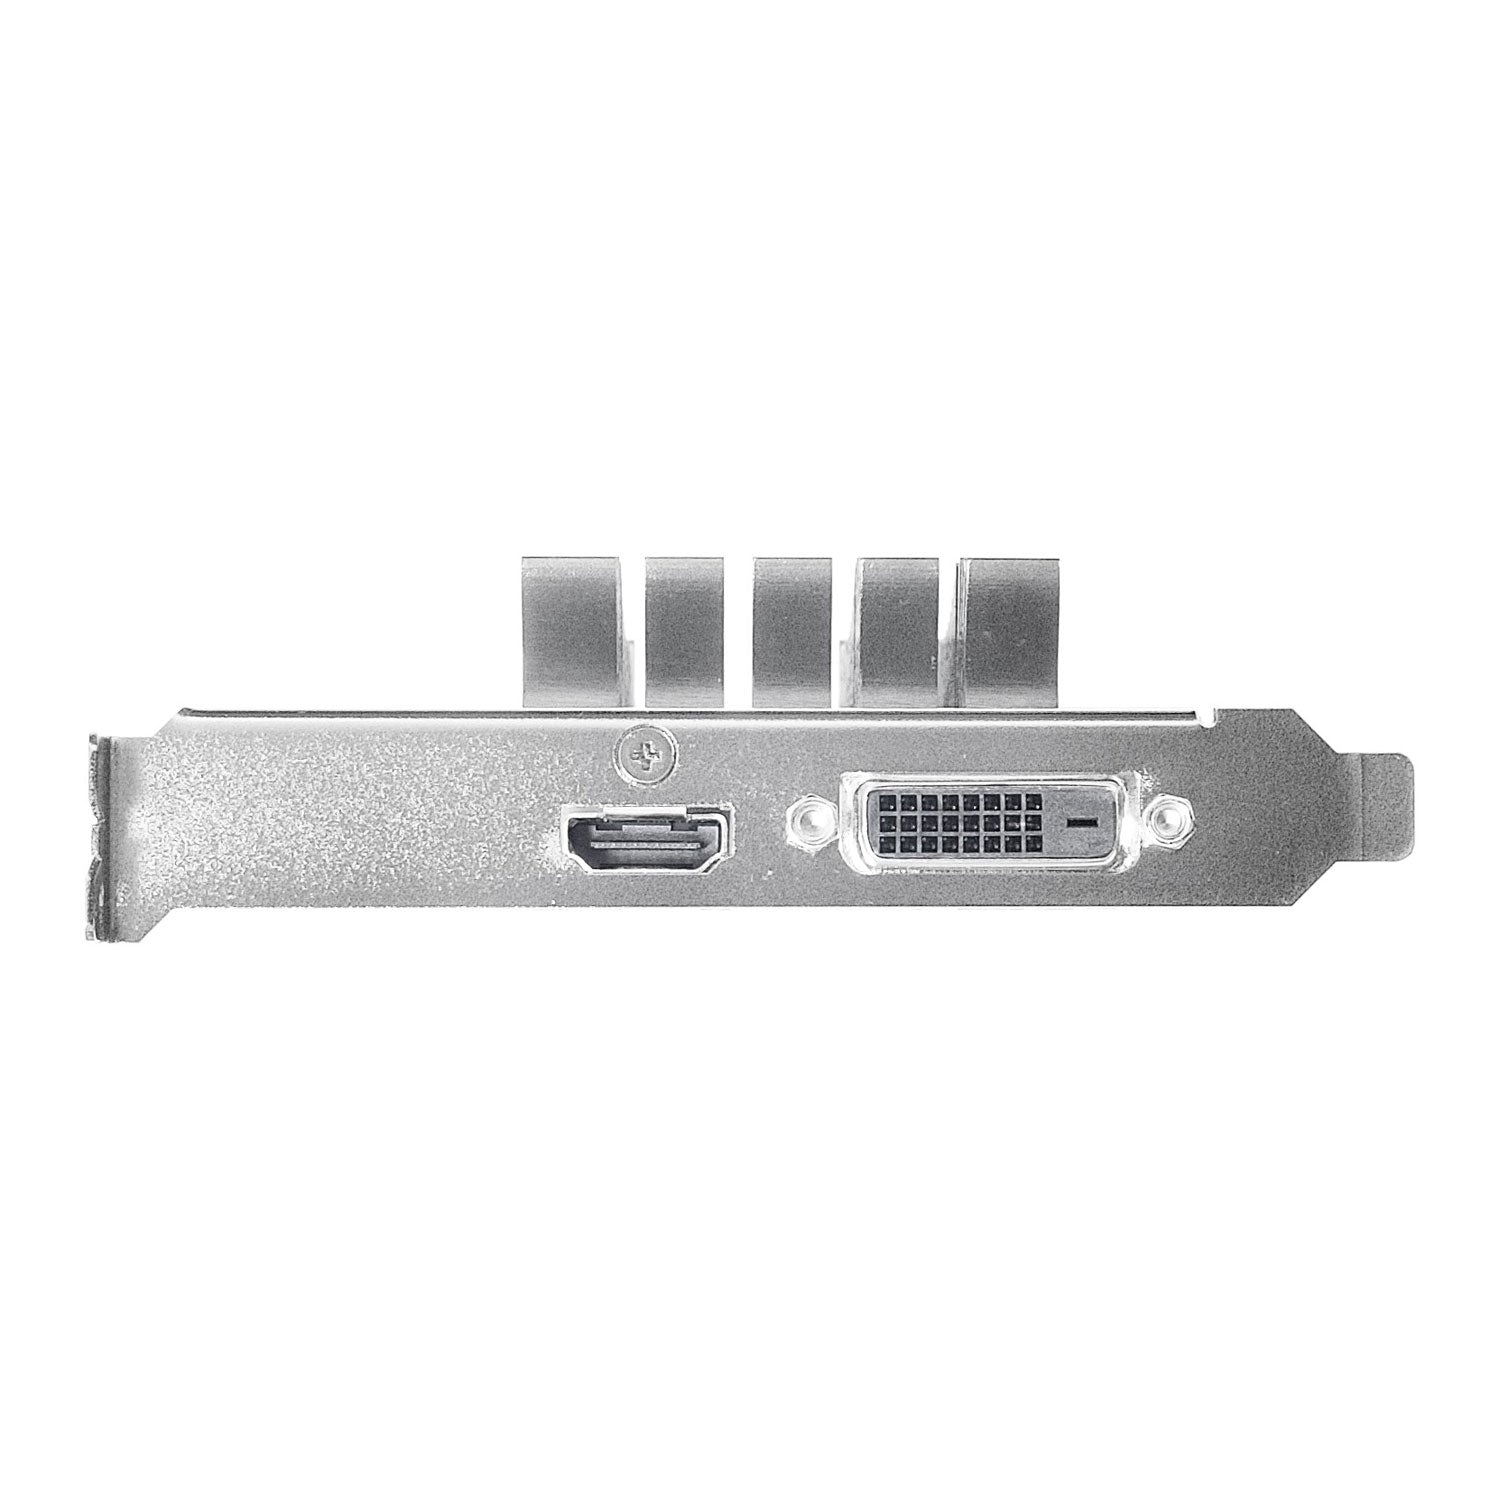 Asus GeForce GT 1030, 2GB DDR5, PCIe3, DVI, HDMI, 1506MHz Clock, Silent, Low Profile (Bracket Included) - WebDuke Computers